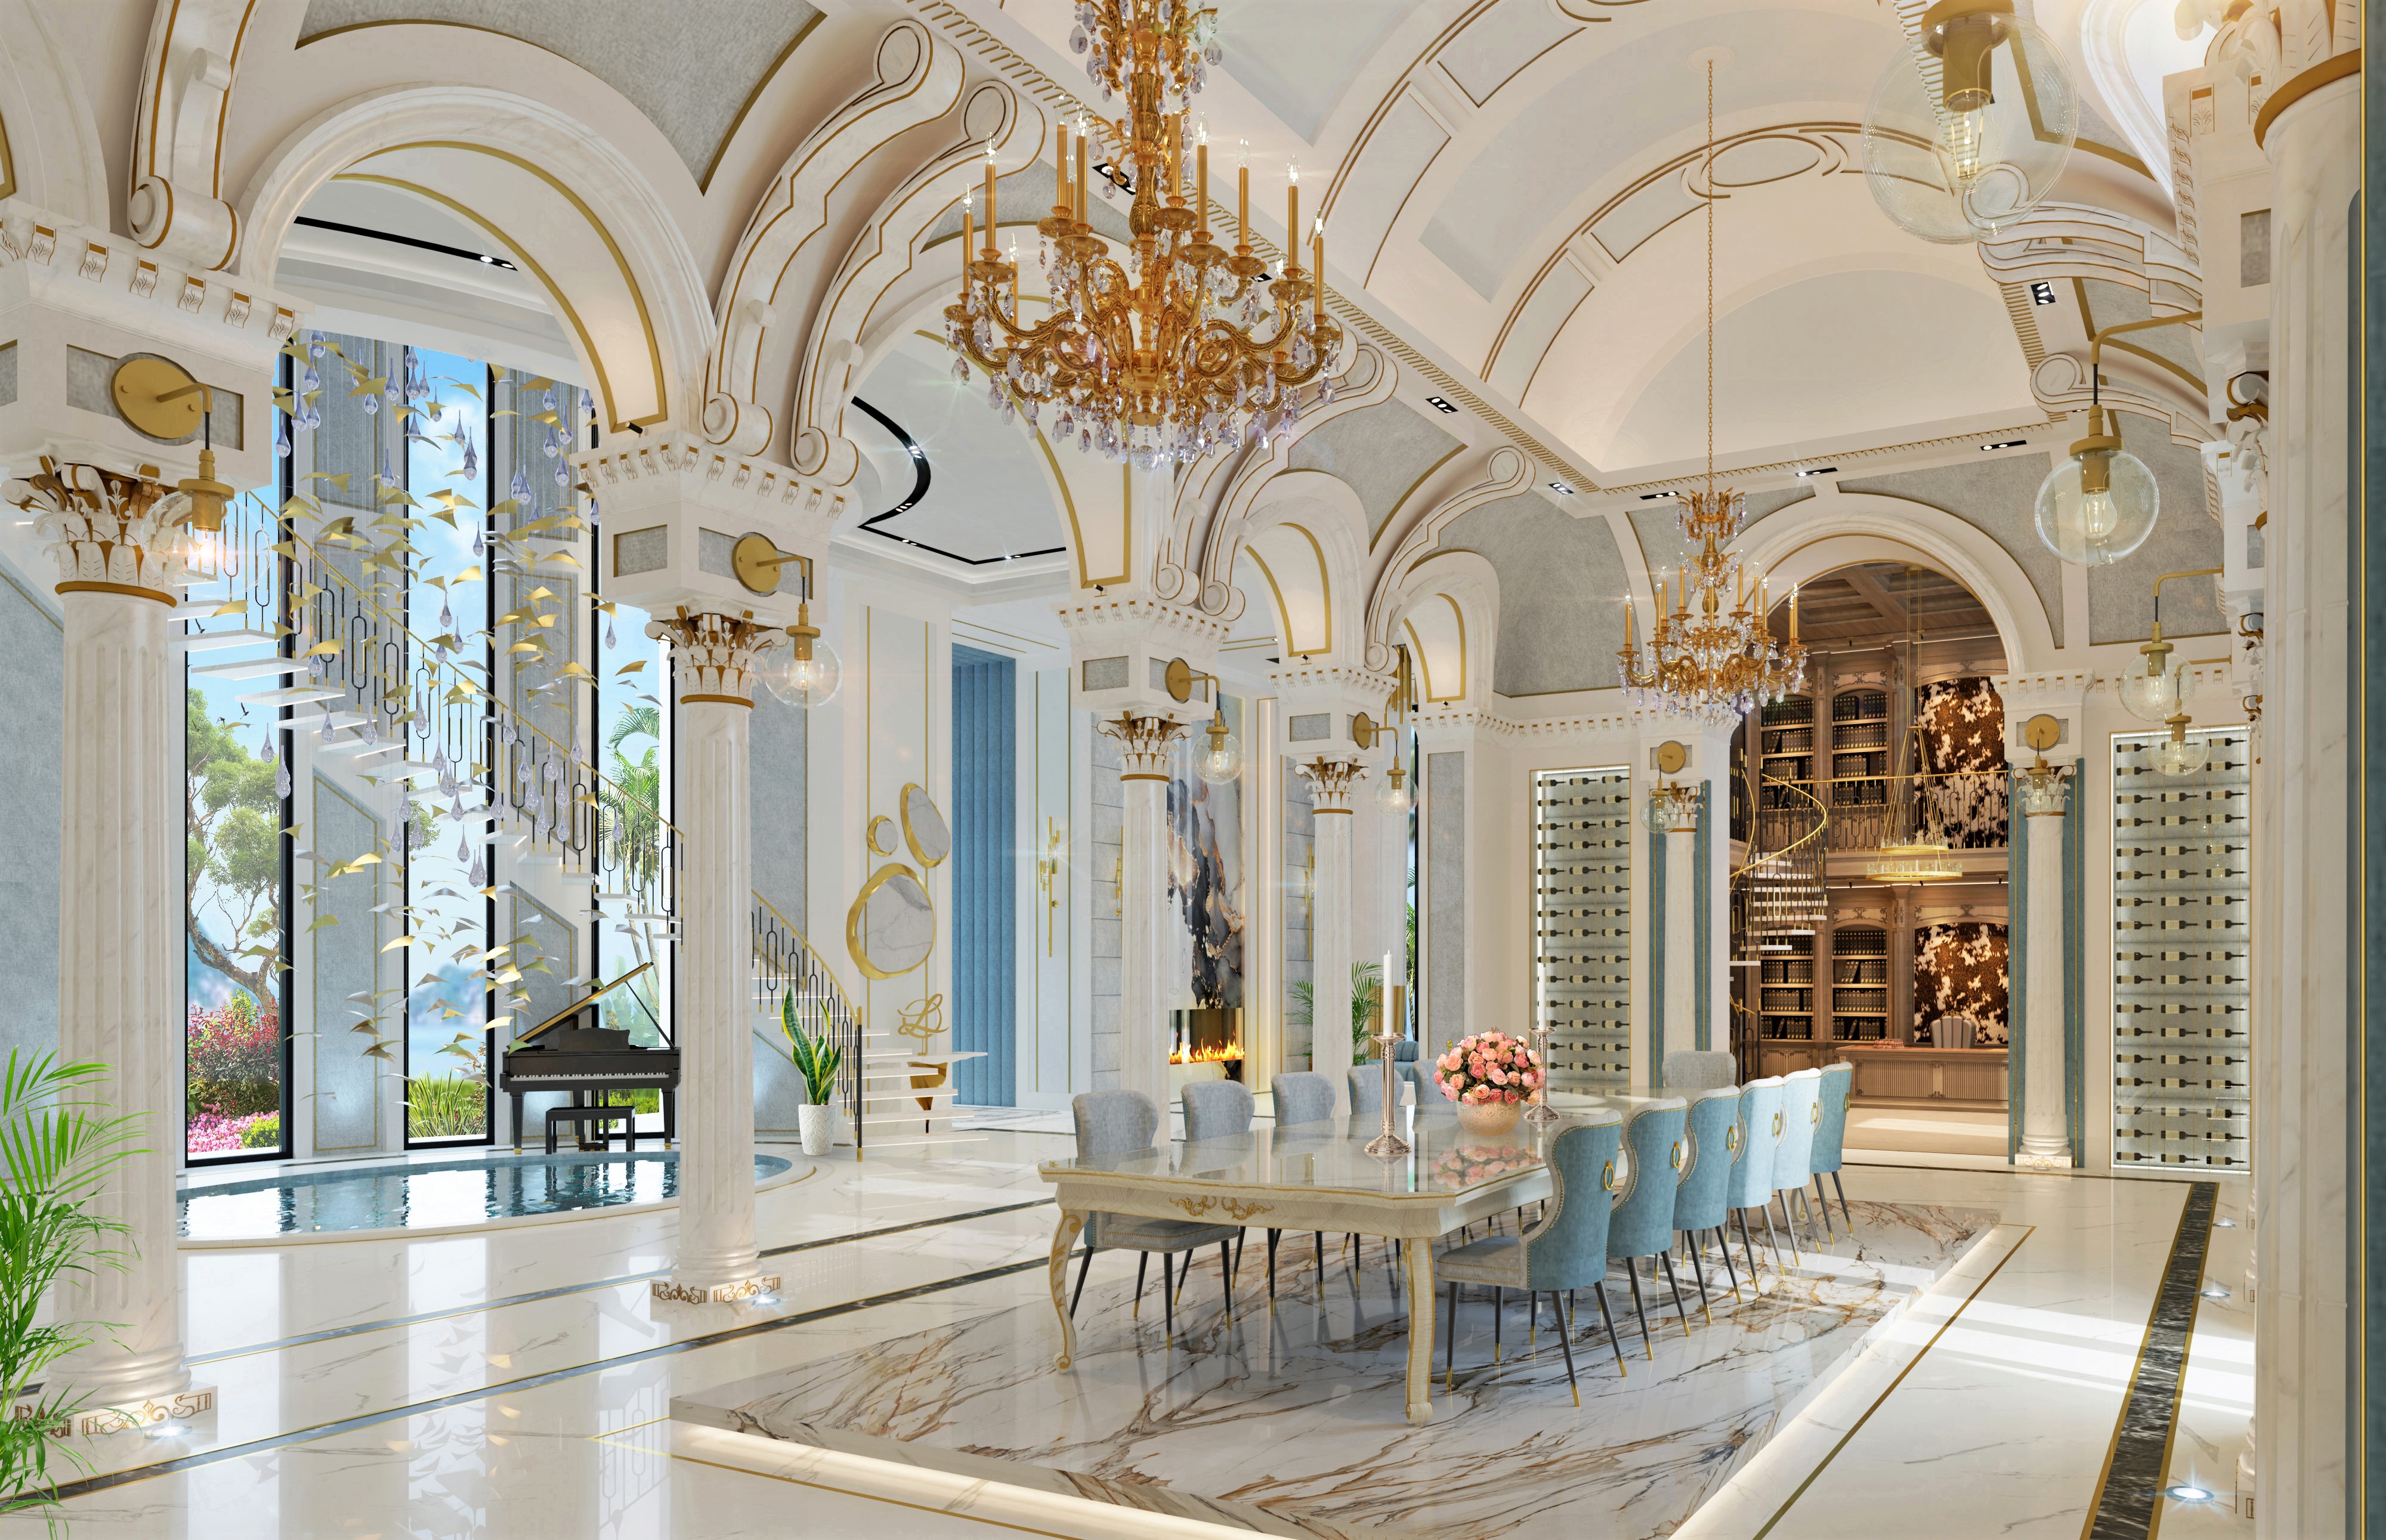 Royal Mansion Interior Design | Autodesk Community Gallery